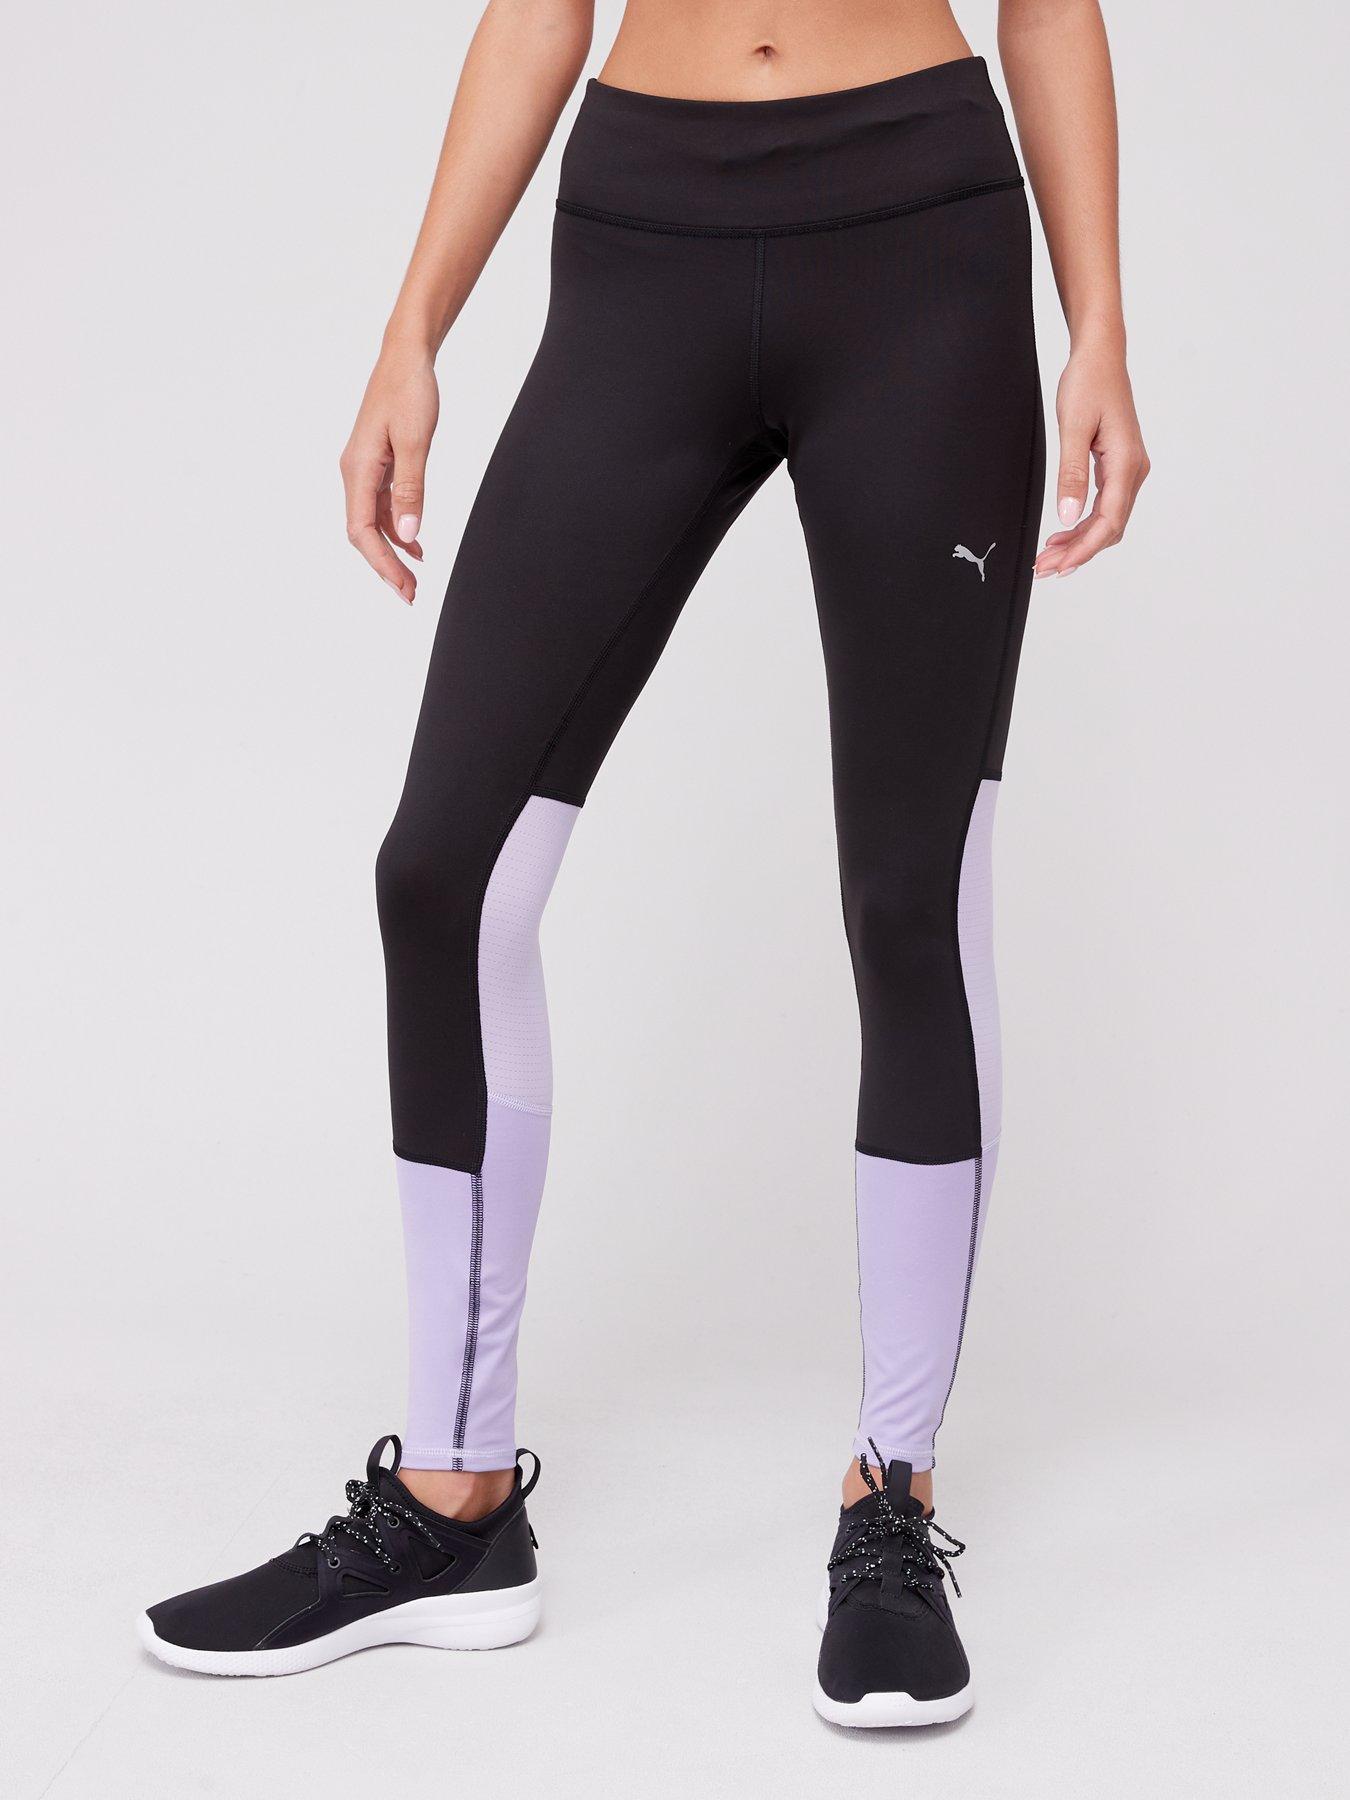 Women's PUMA Performance Yoga Pants in Black size XS